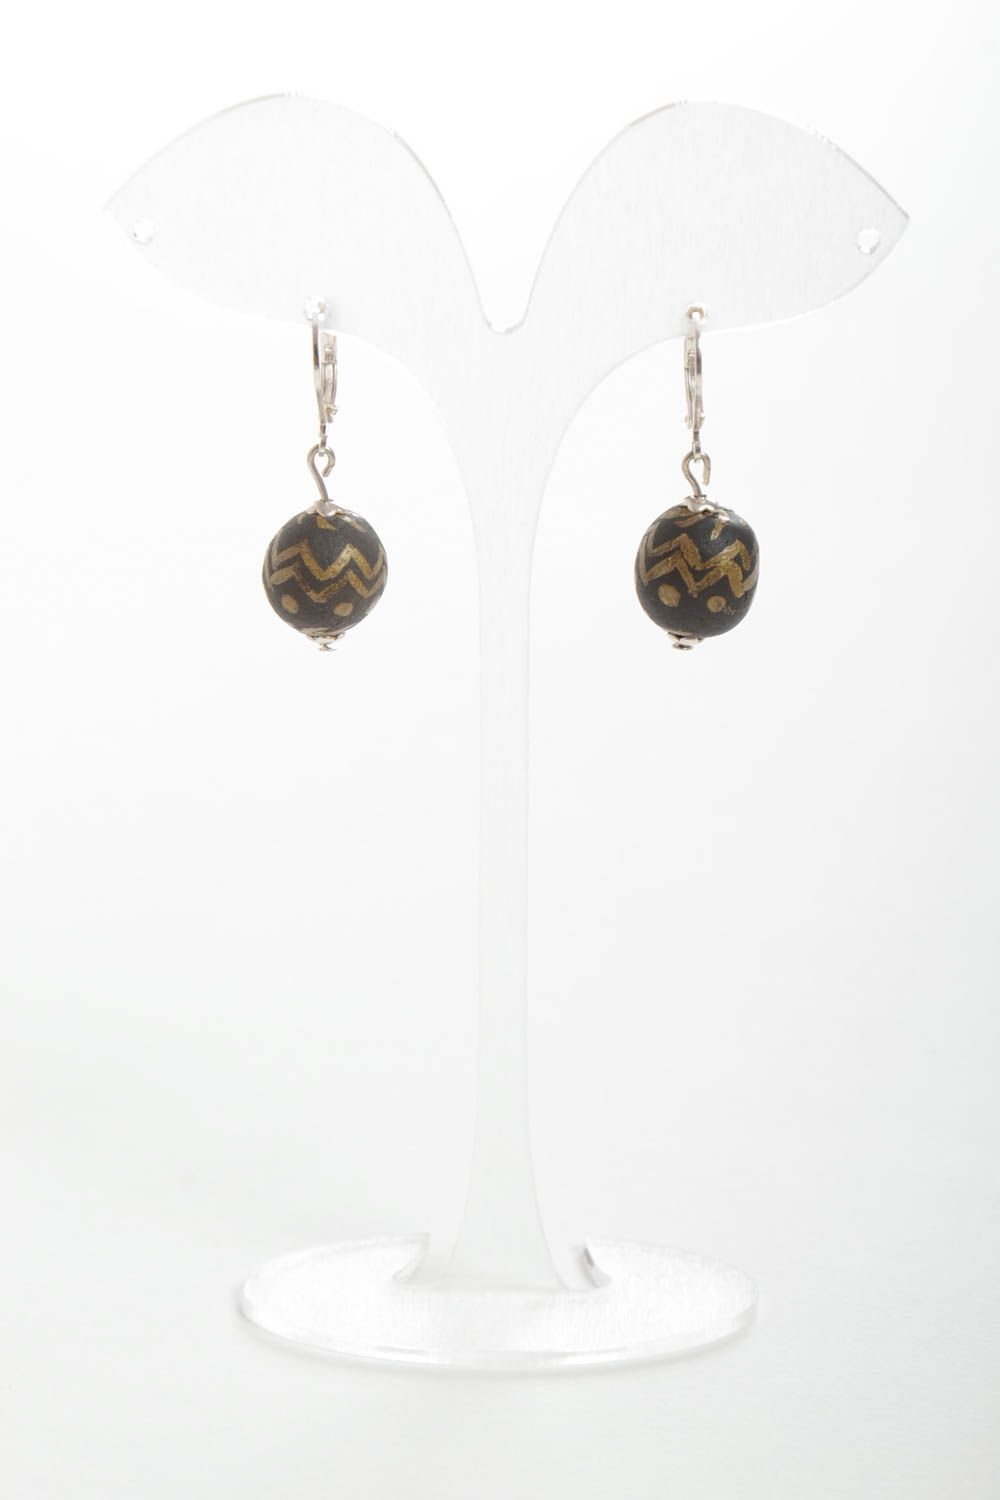 Handmade designer ceramic earrings clay ball earrings ceramic jewelry designs photo 2